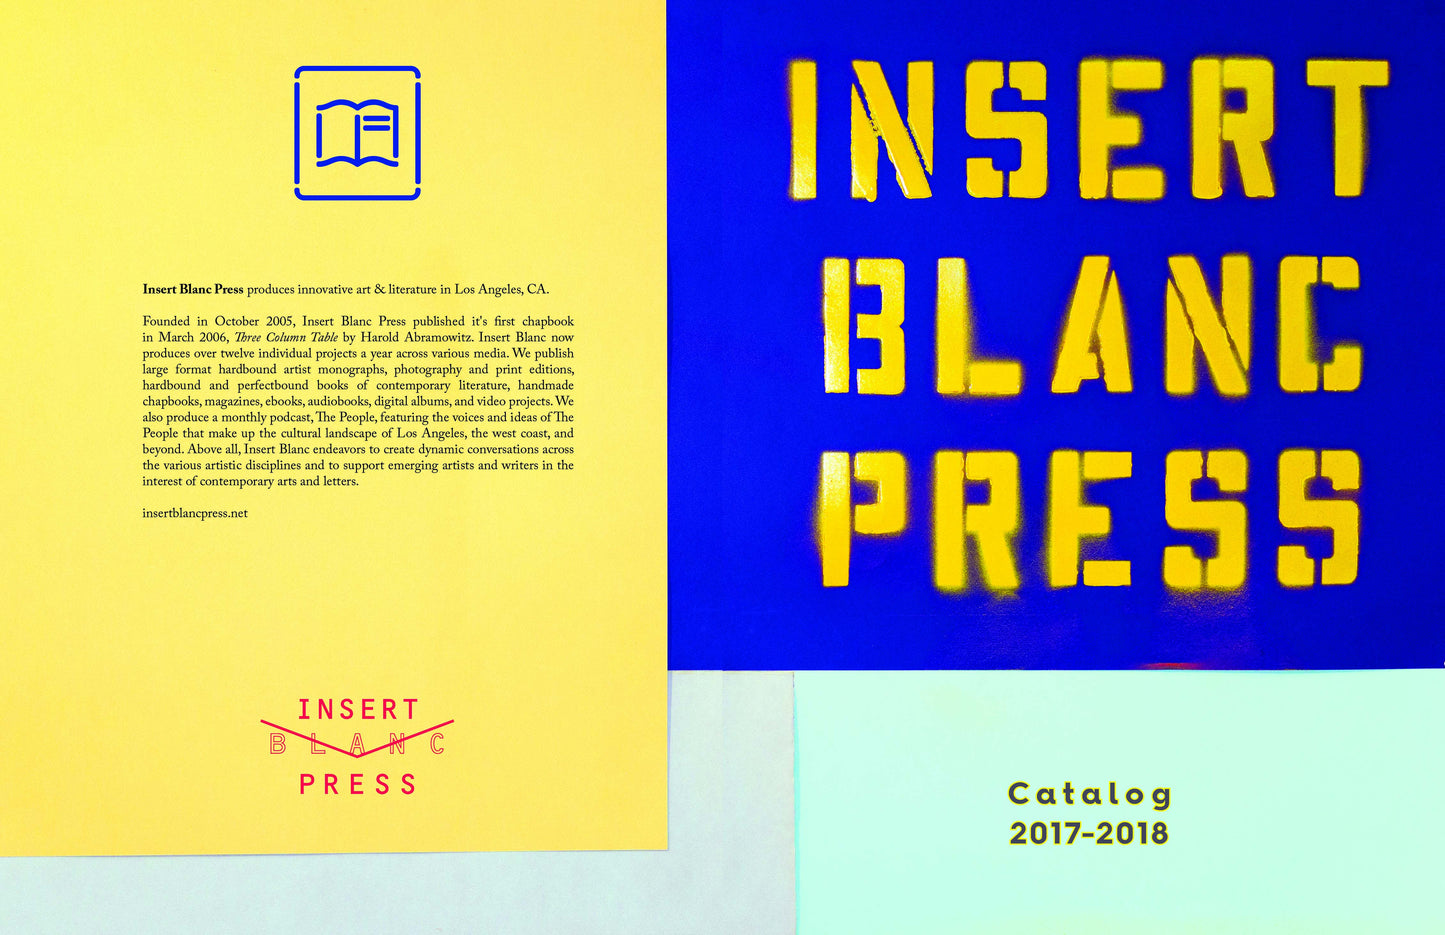 Insert Blanc Press Catalog